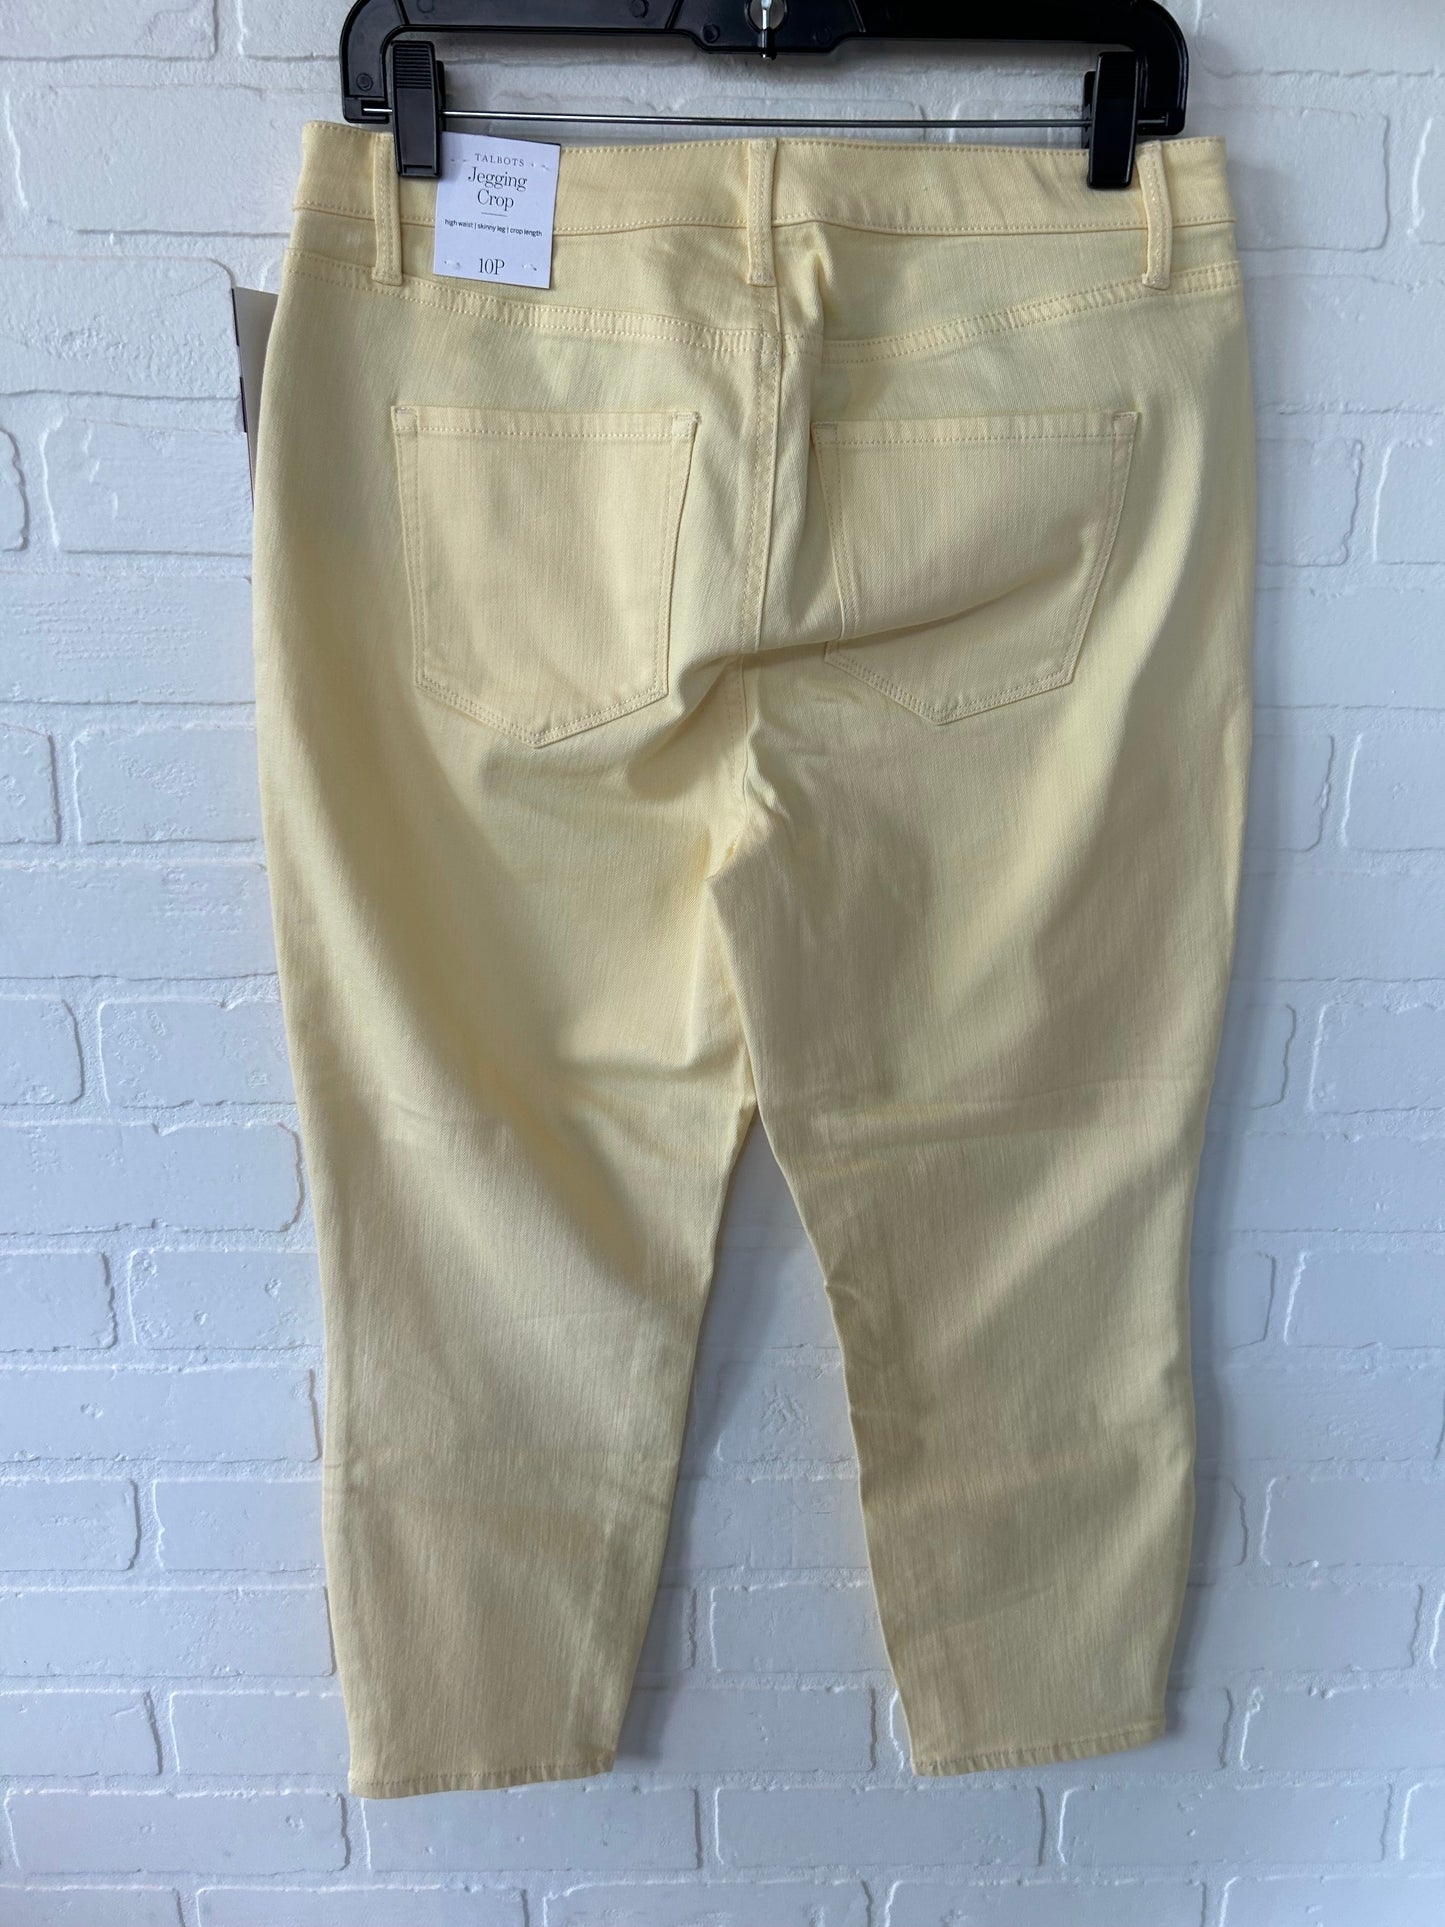 Yellow Pants Cropped Talbots, Size 10petite